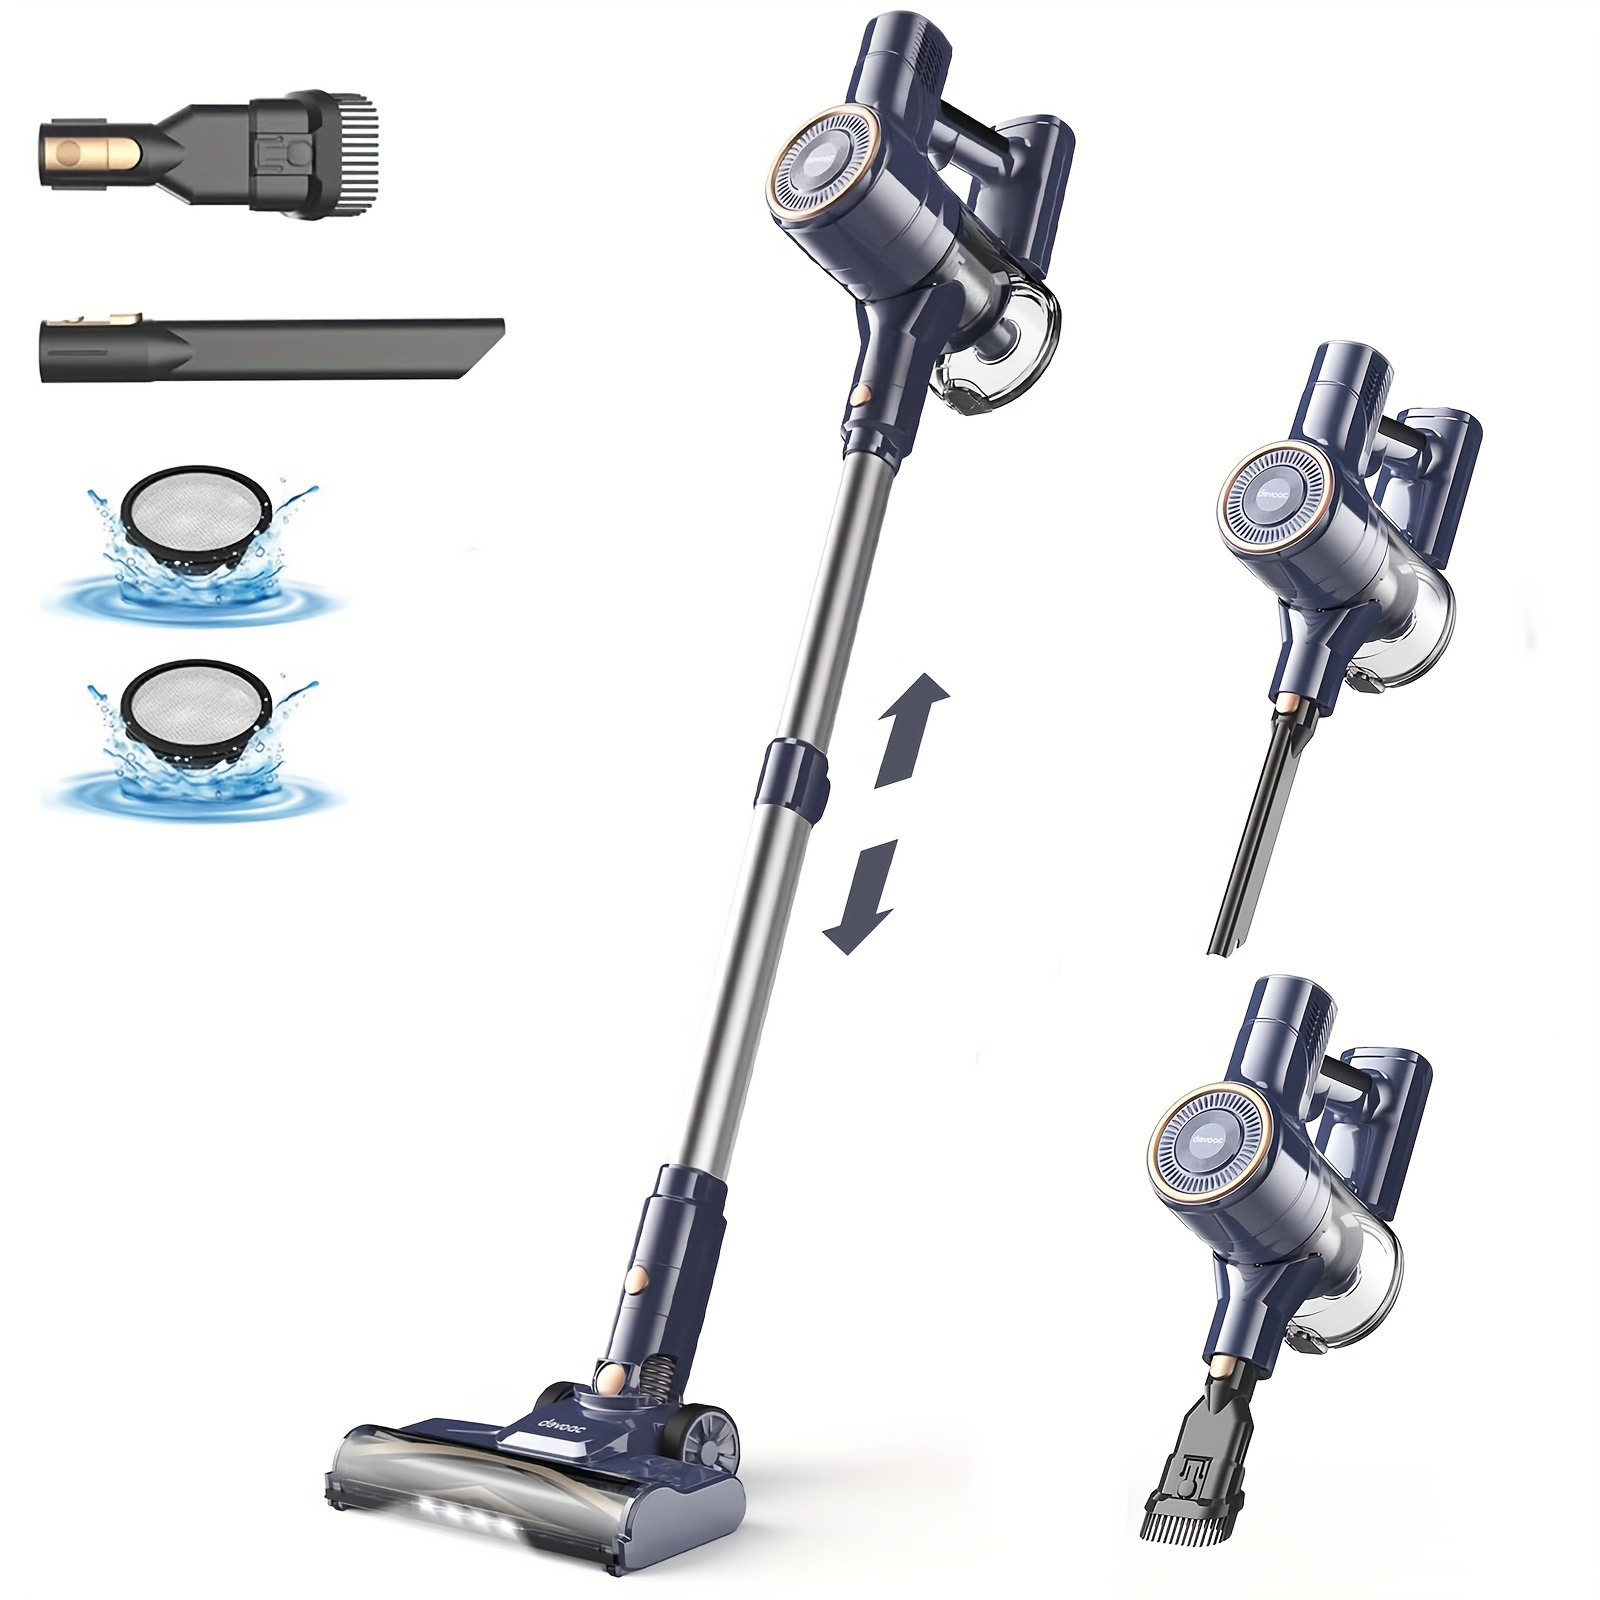 

I8 Corded Vacuum Cleaner, 600w 23kpa Stick Vacuum, Free-stand 6 In 1 Powerful Lightweight Handheld Vacuum For Hard Floor Carpet Pet Hair Home